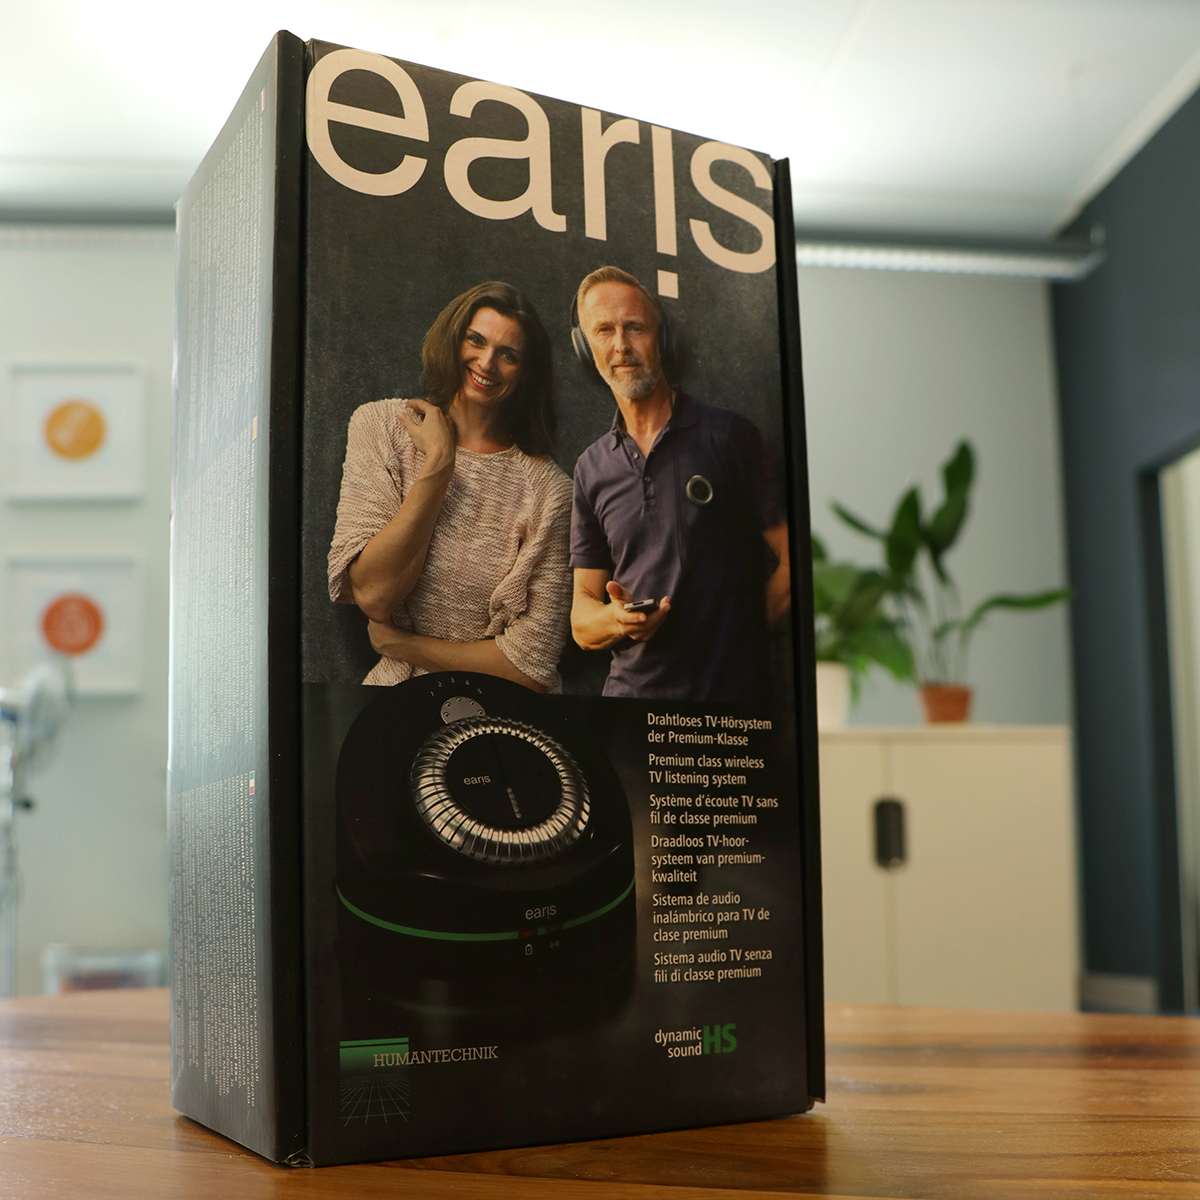 EARIS Premium Digital PR Neckloop System